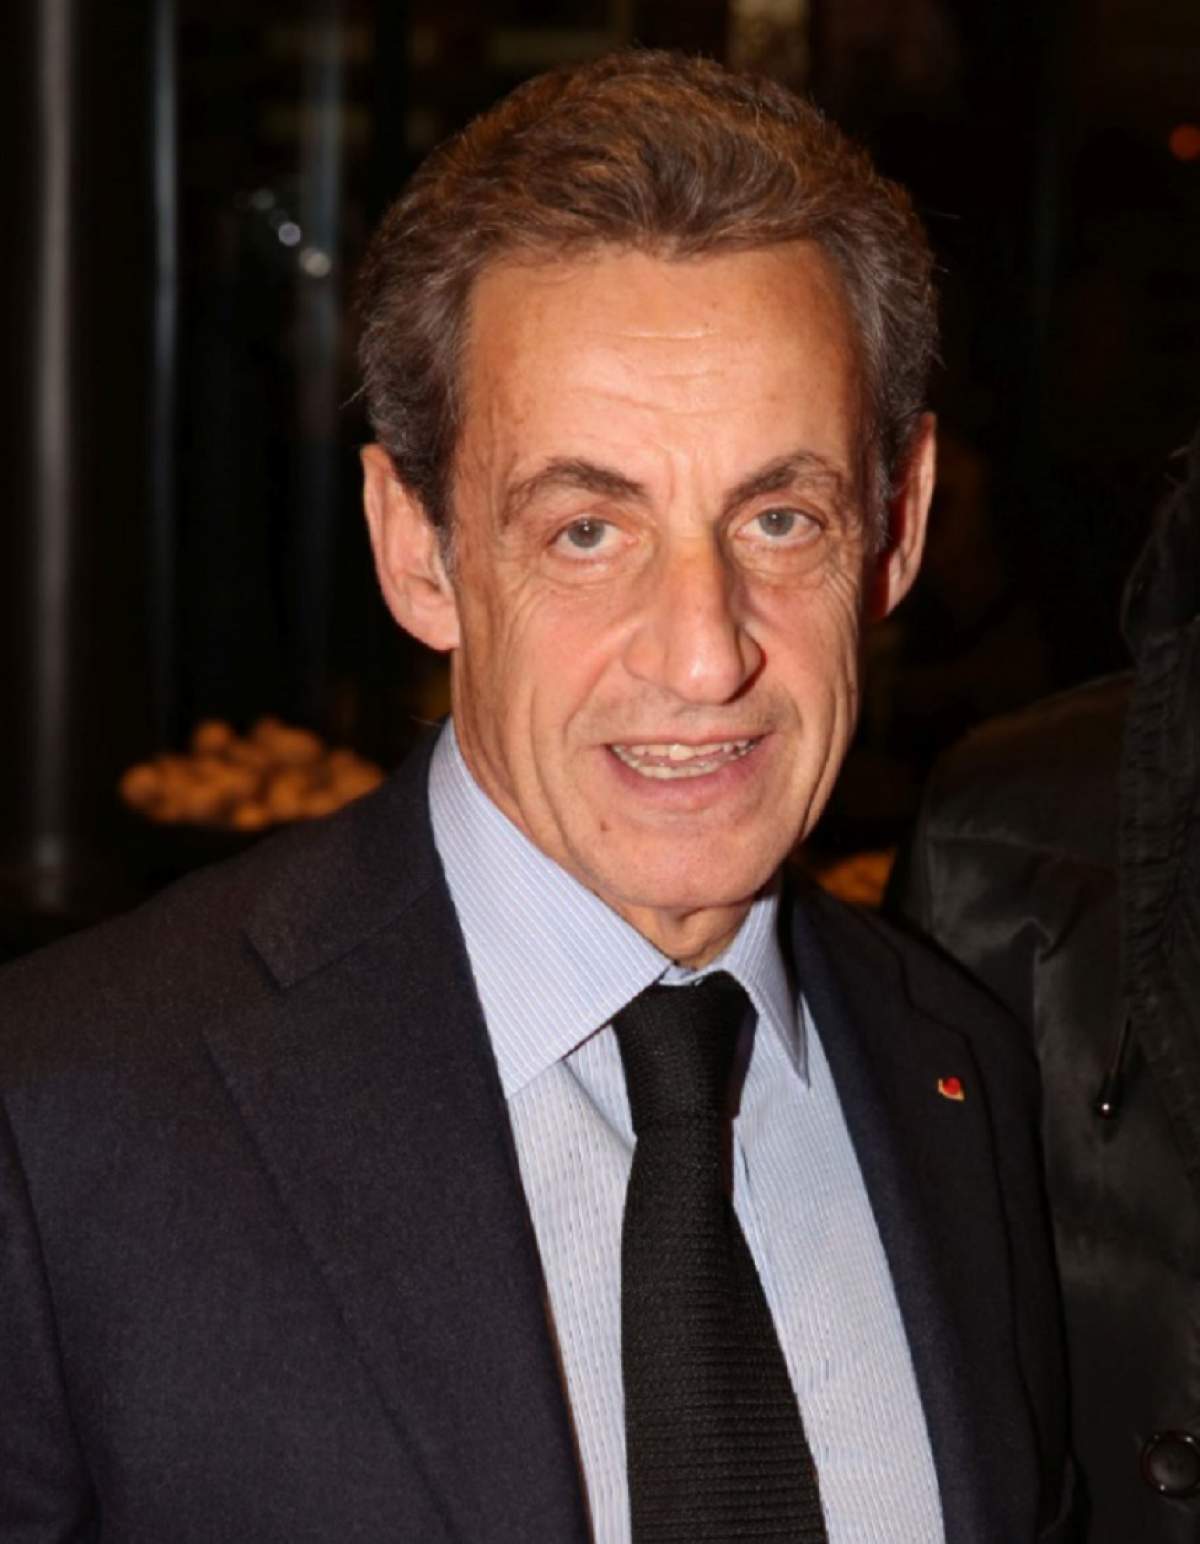 Nicolas Sarkozy, fostul președinte francez, reținut de poliție